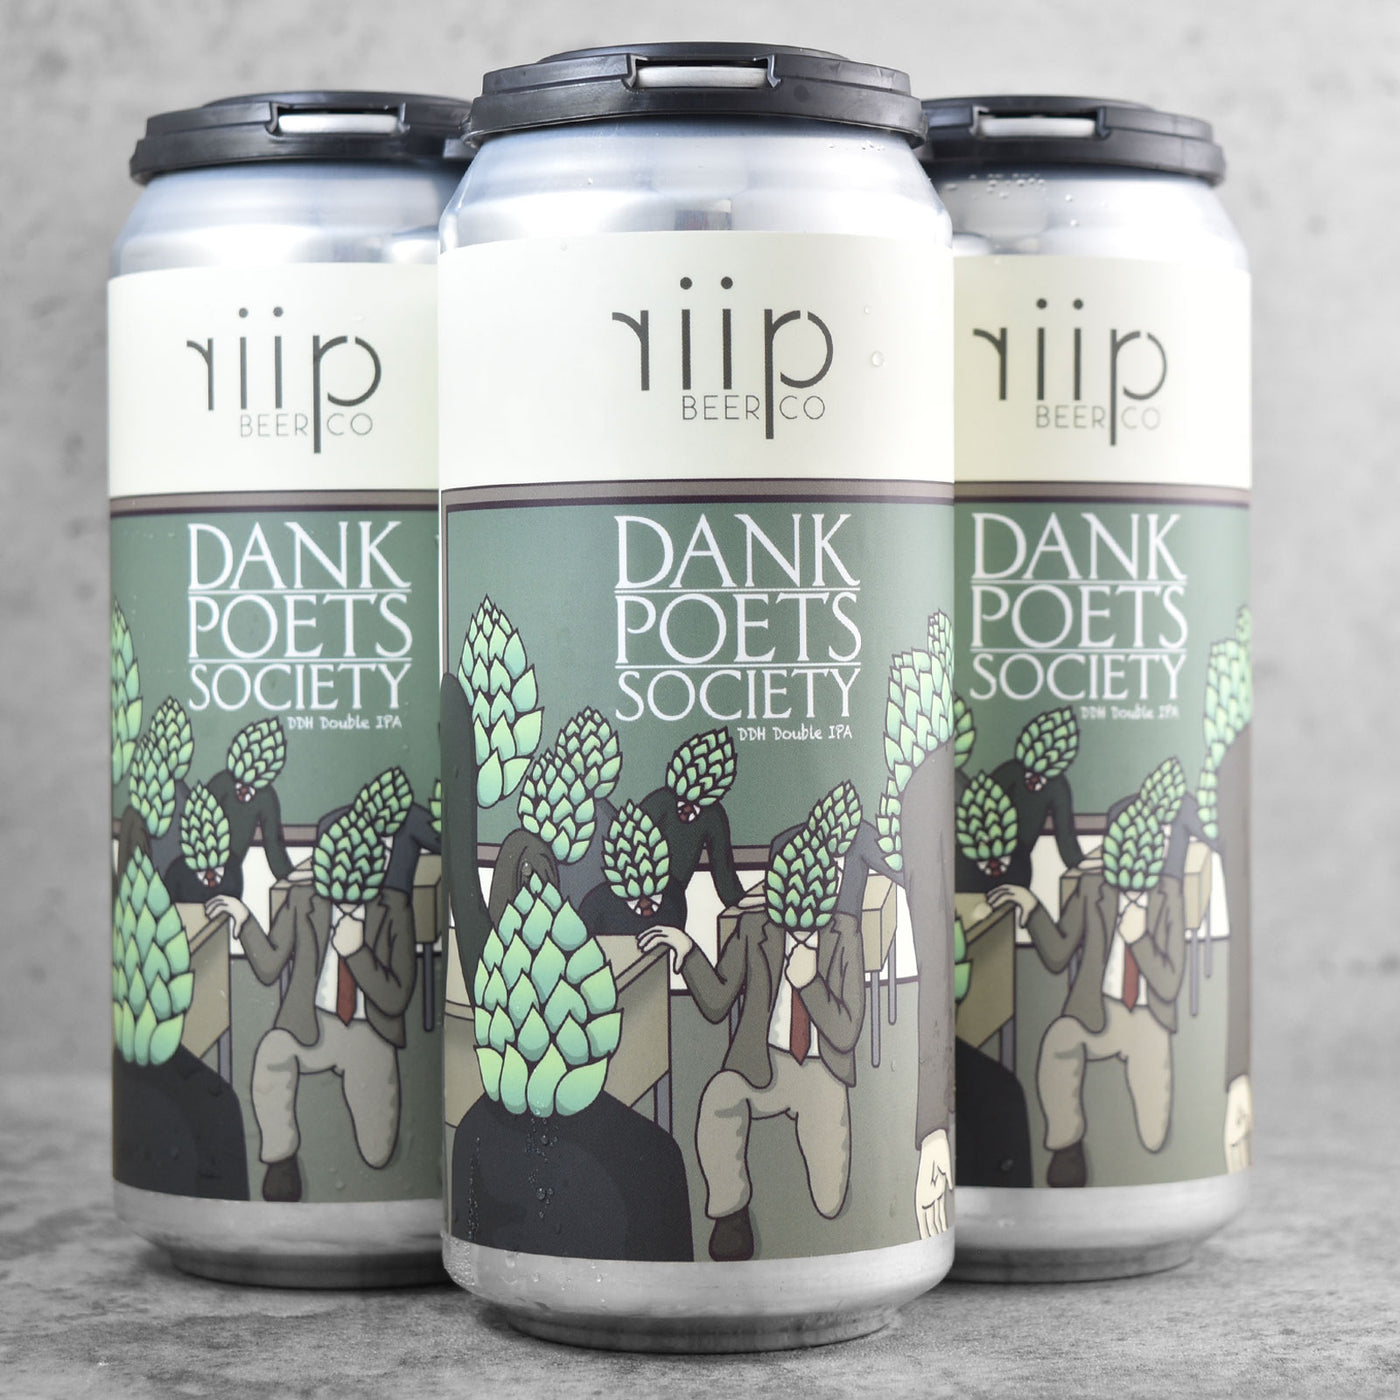 riip beer company | Dank Poets Society